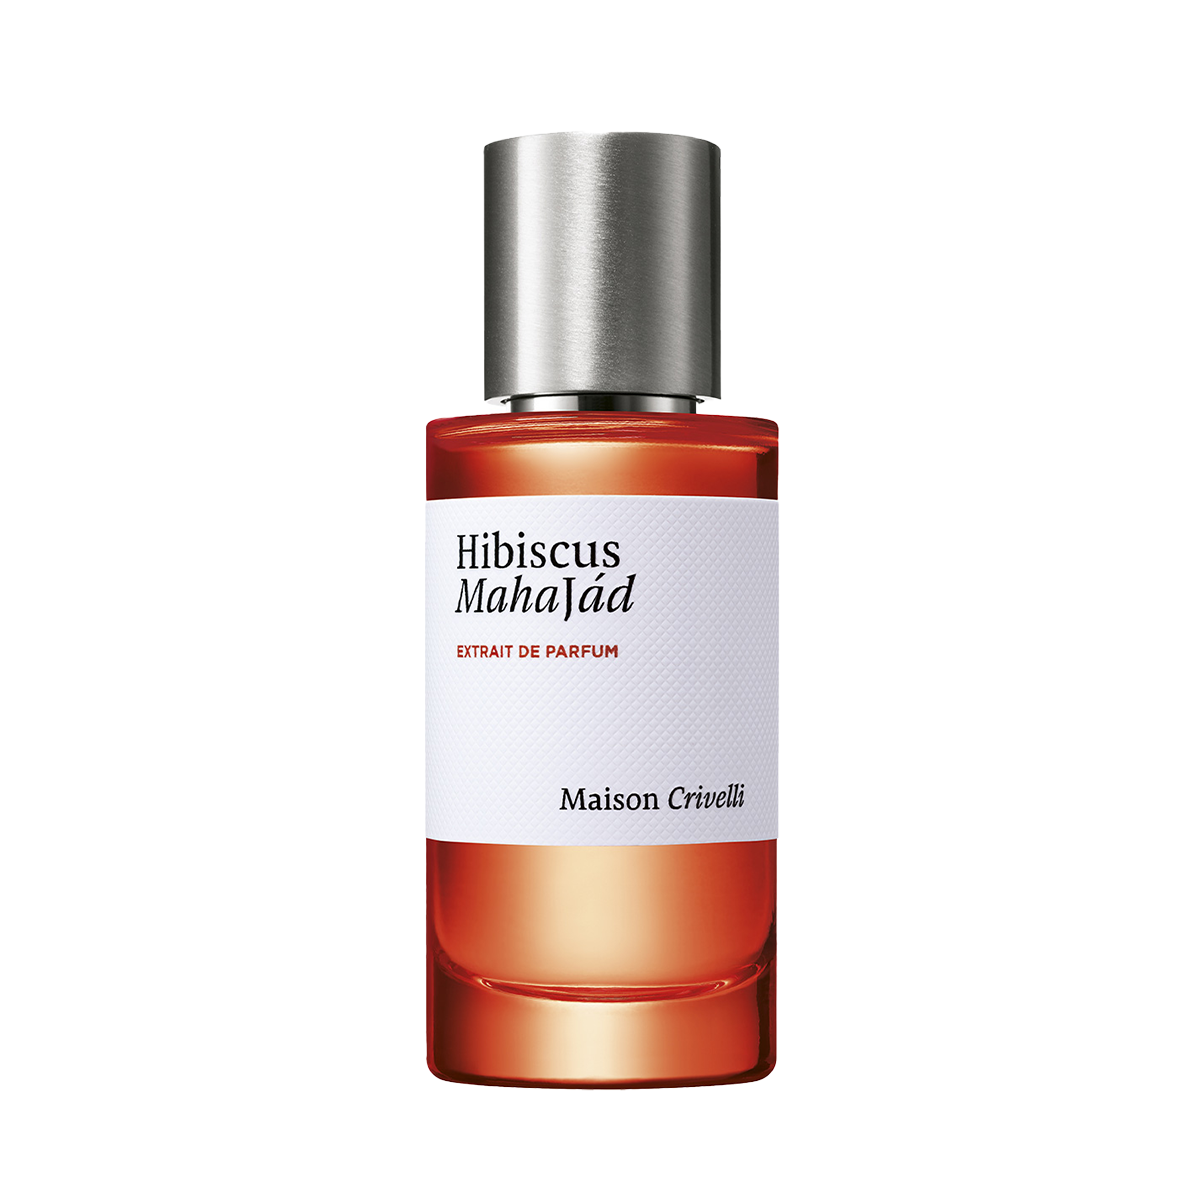 Hibiscus Mahajad Parfum <br> Extrait de Parfum 50ml